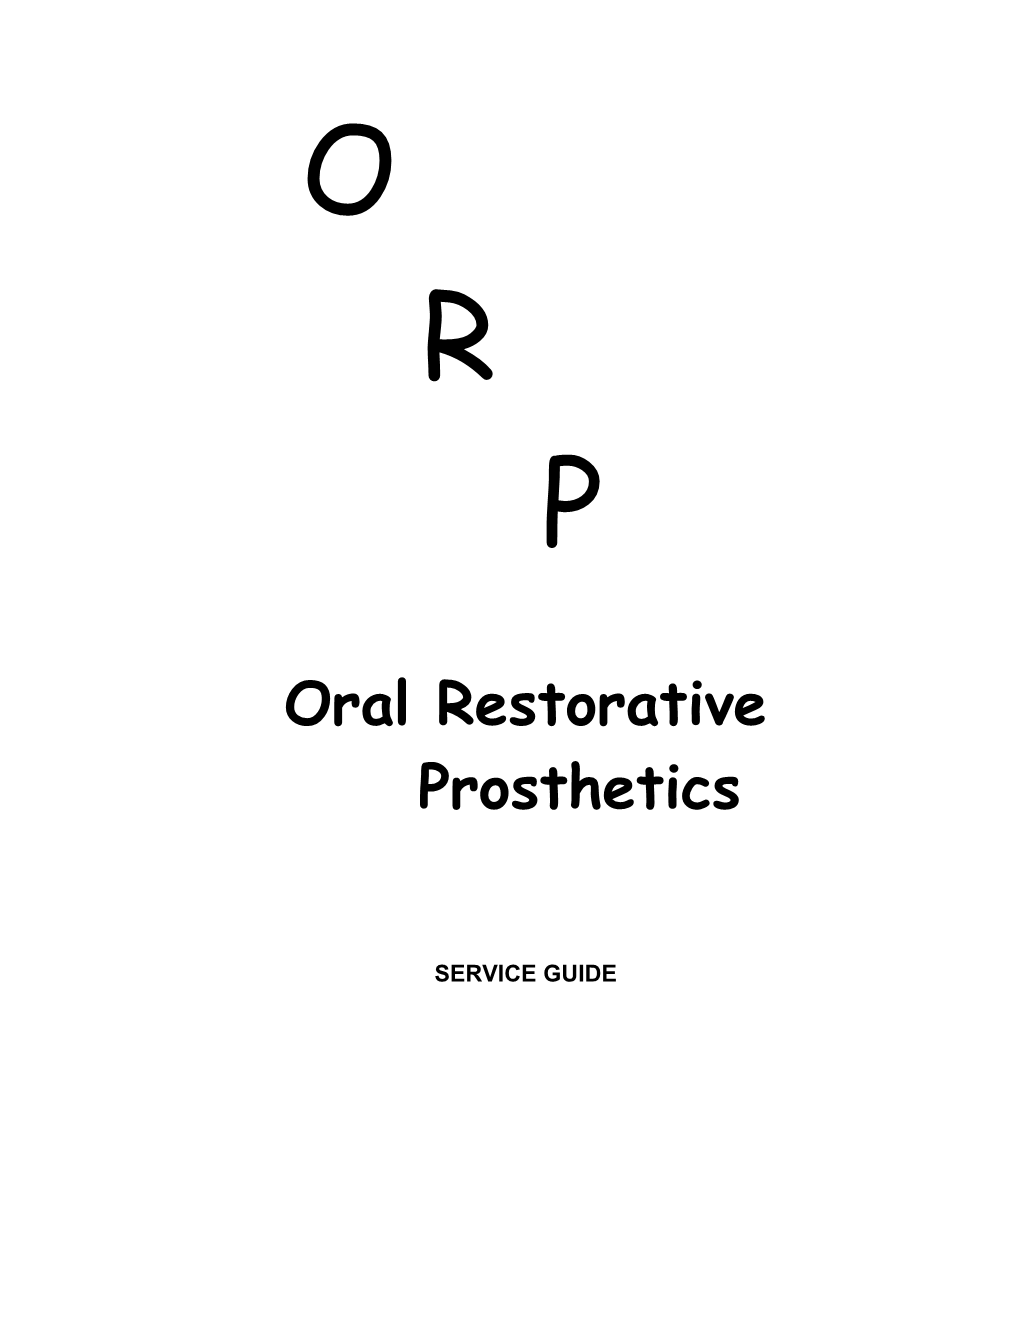 Oral Restorative Prosthetics